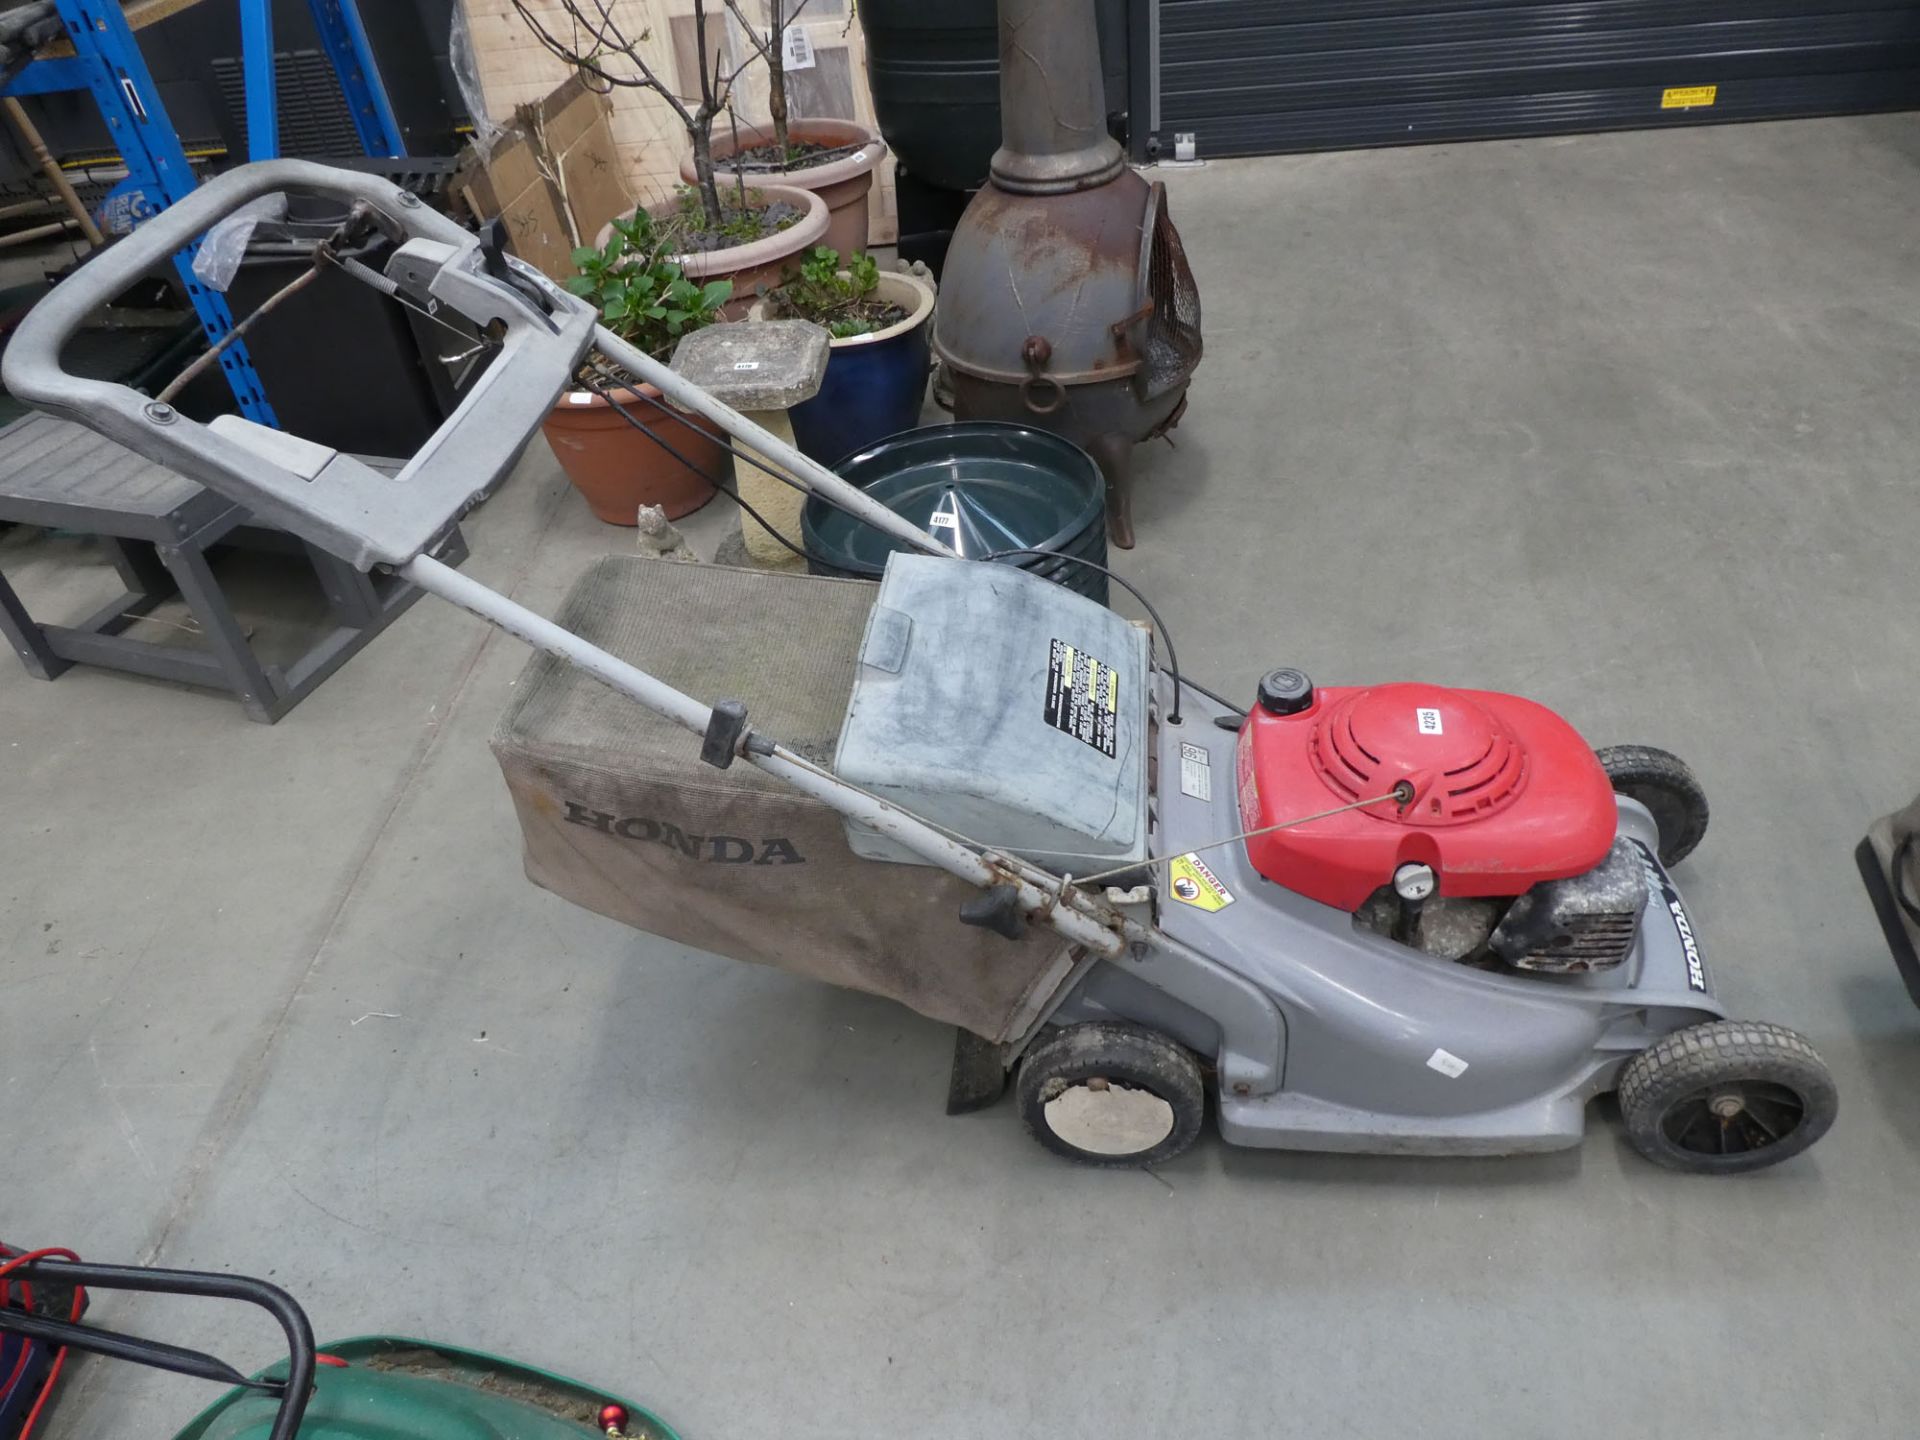 Honda HRV-475 petrol powered rotary mower with grass box